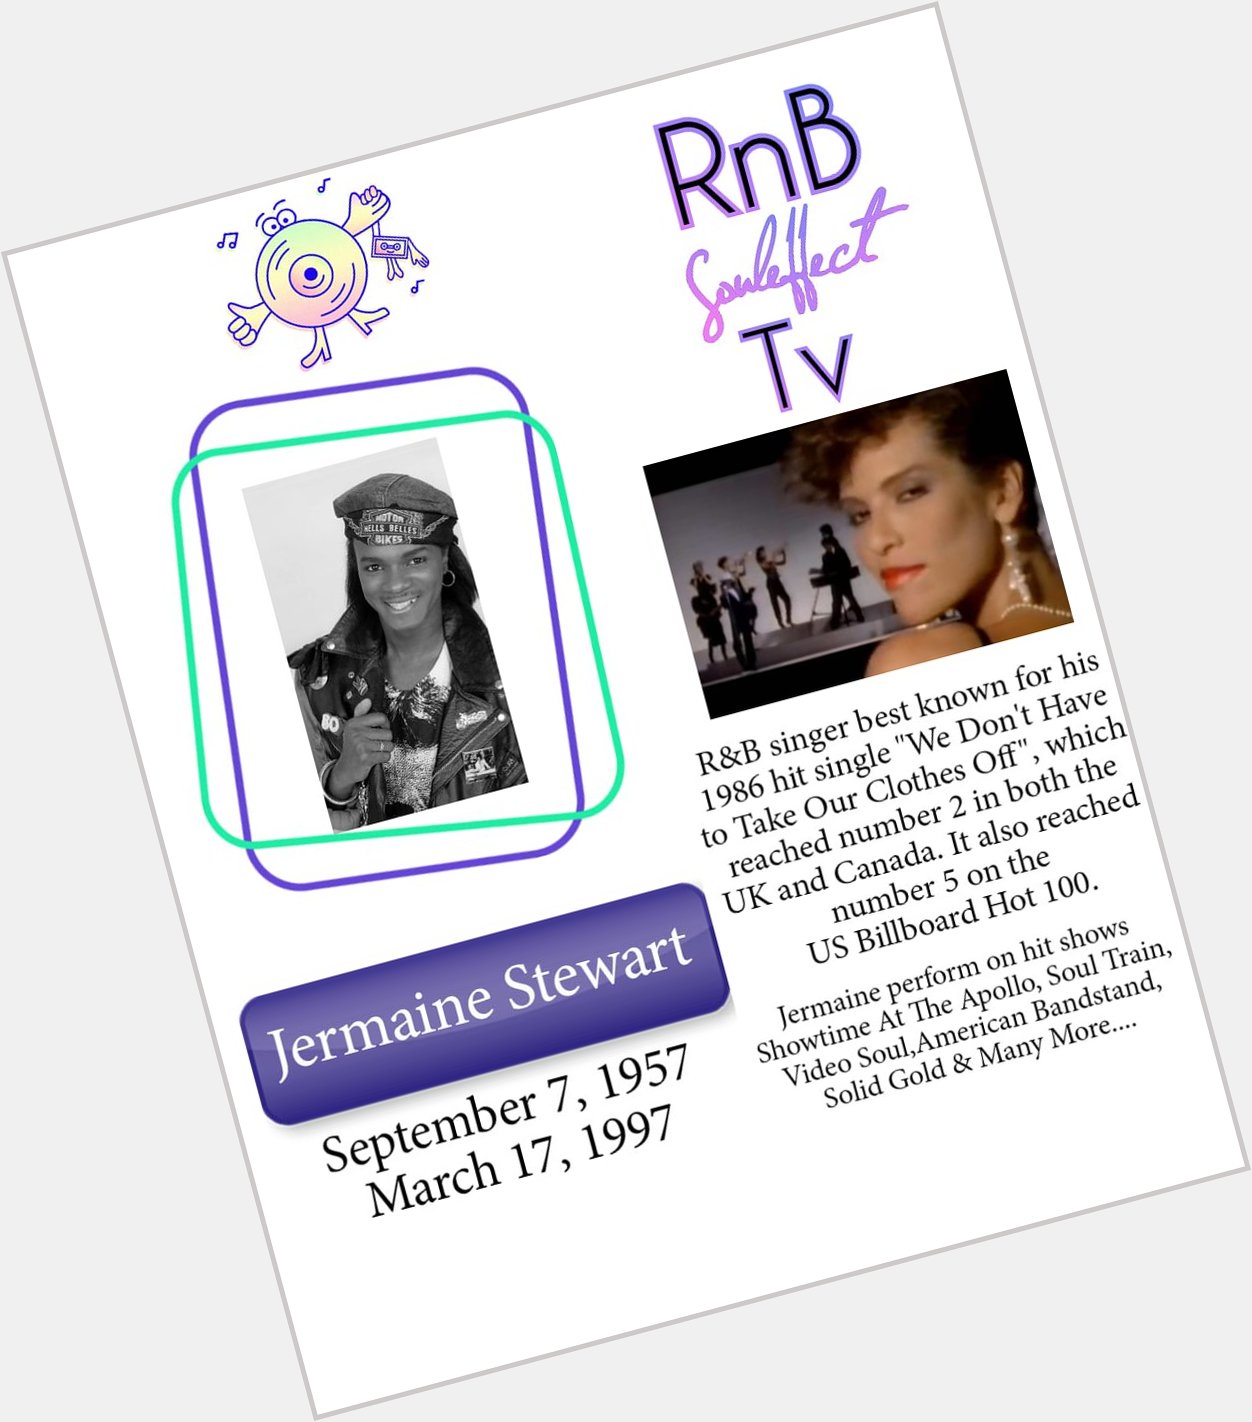 Happy Soul Legend Birthday 
Jermaine Stewart  